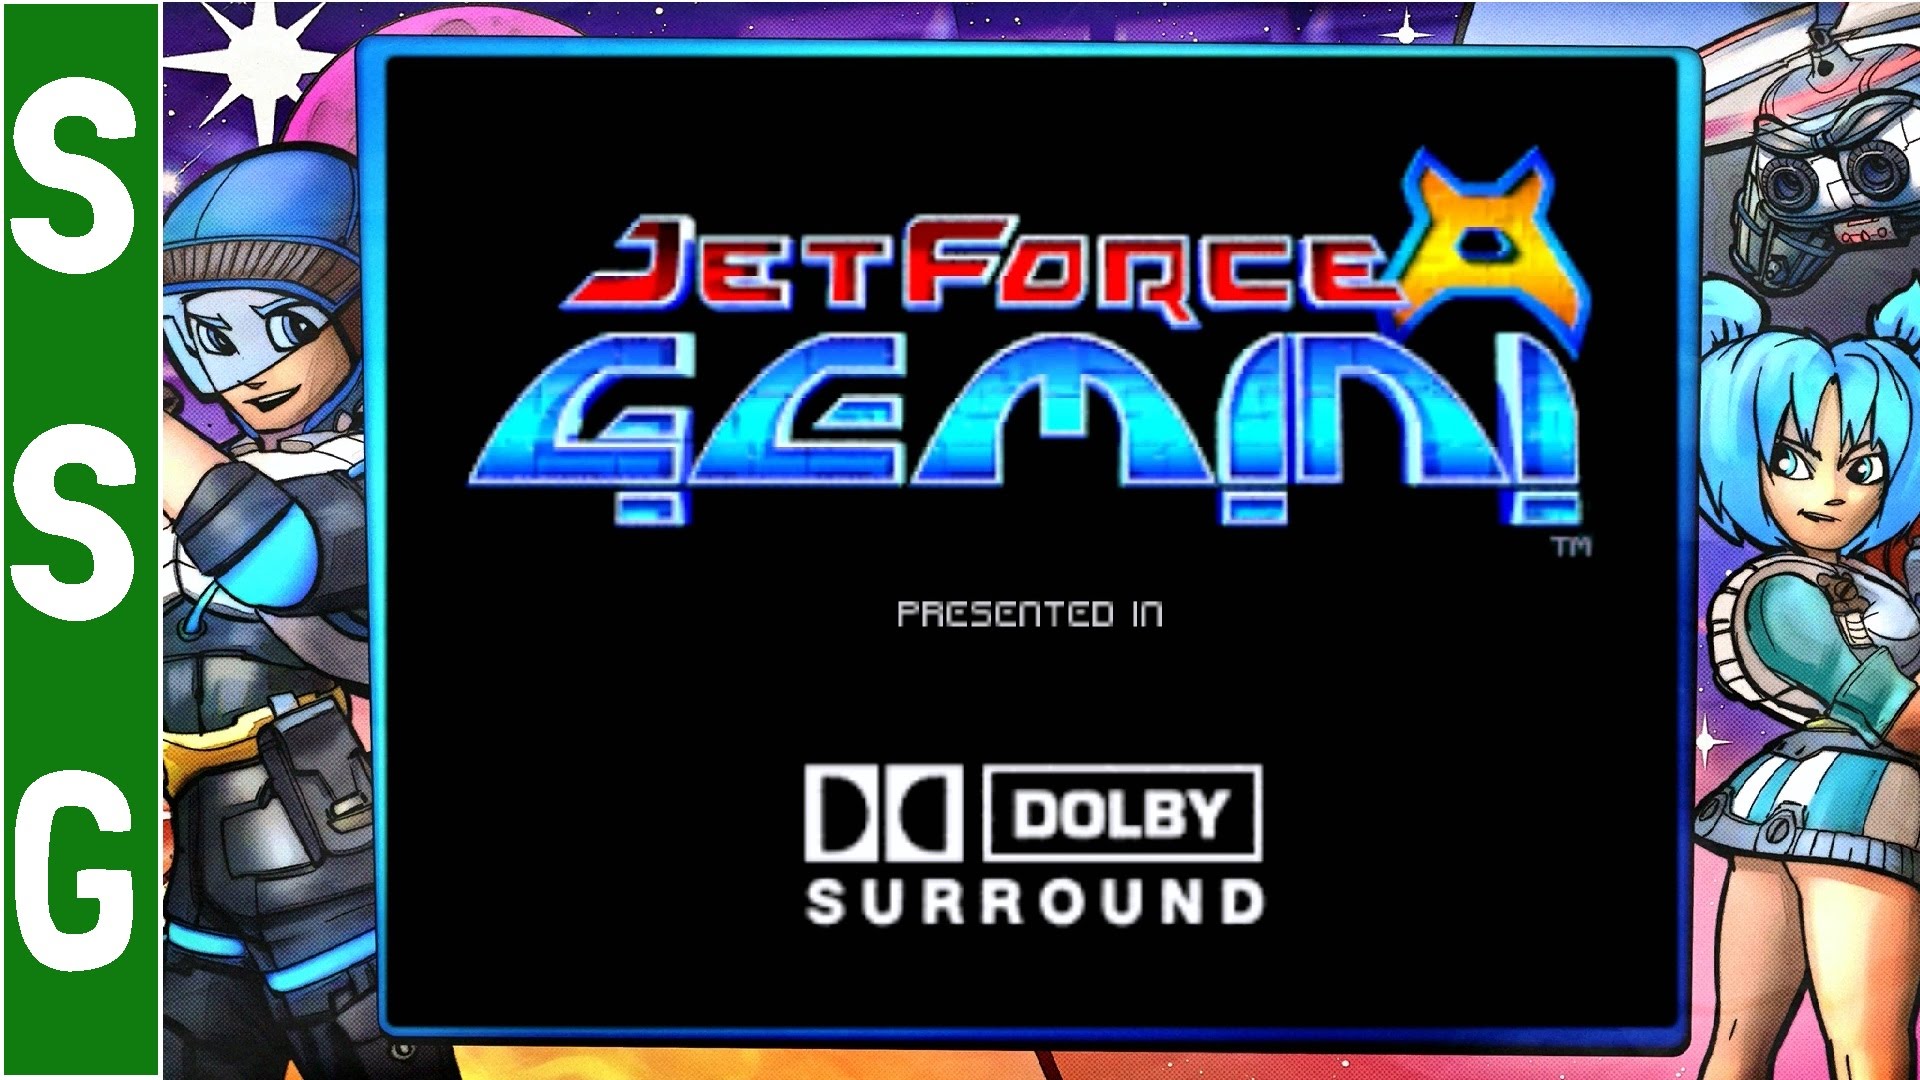 Jet Force Gemini Backgrounds, Compatible - PC, Mobile, Gadgets| 1920x1080 px